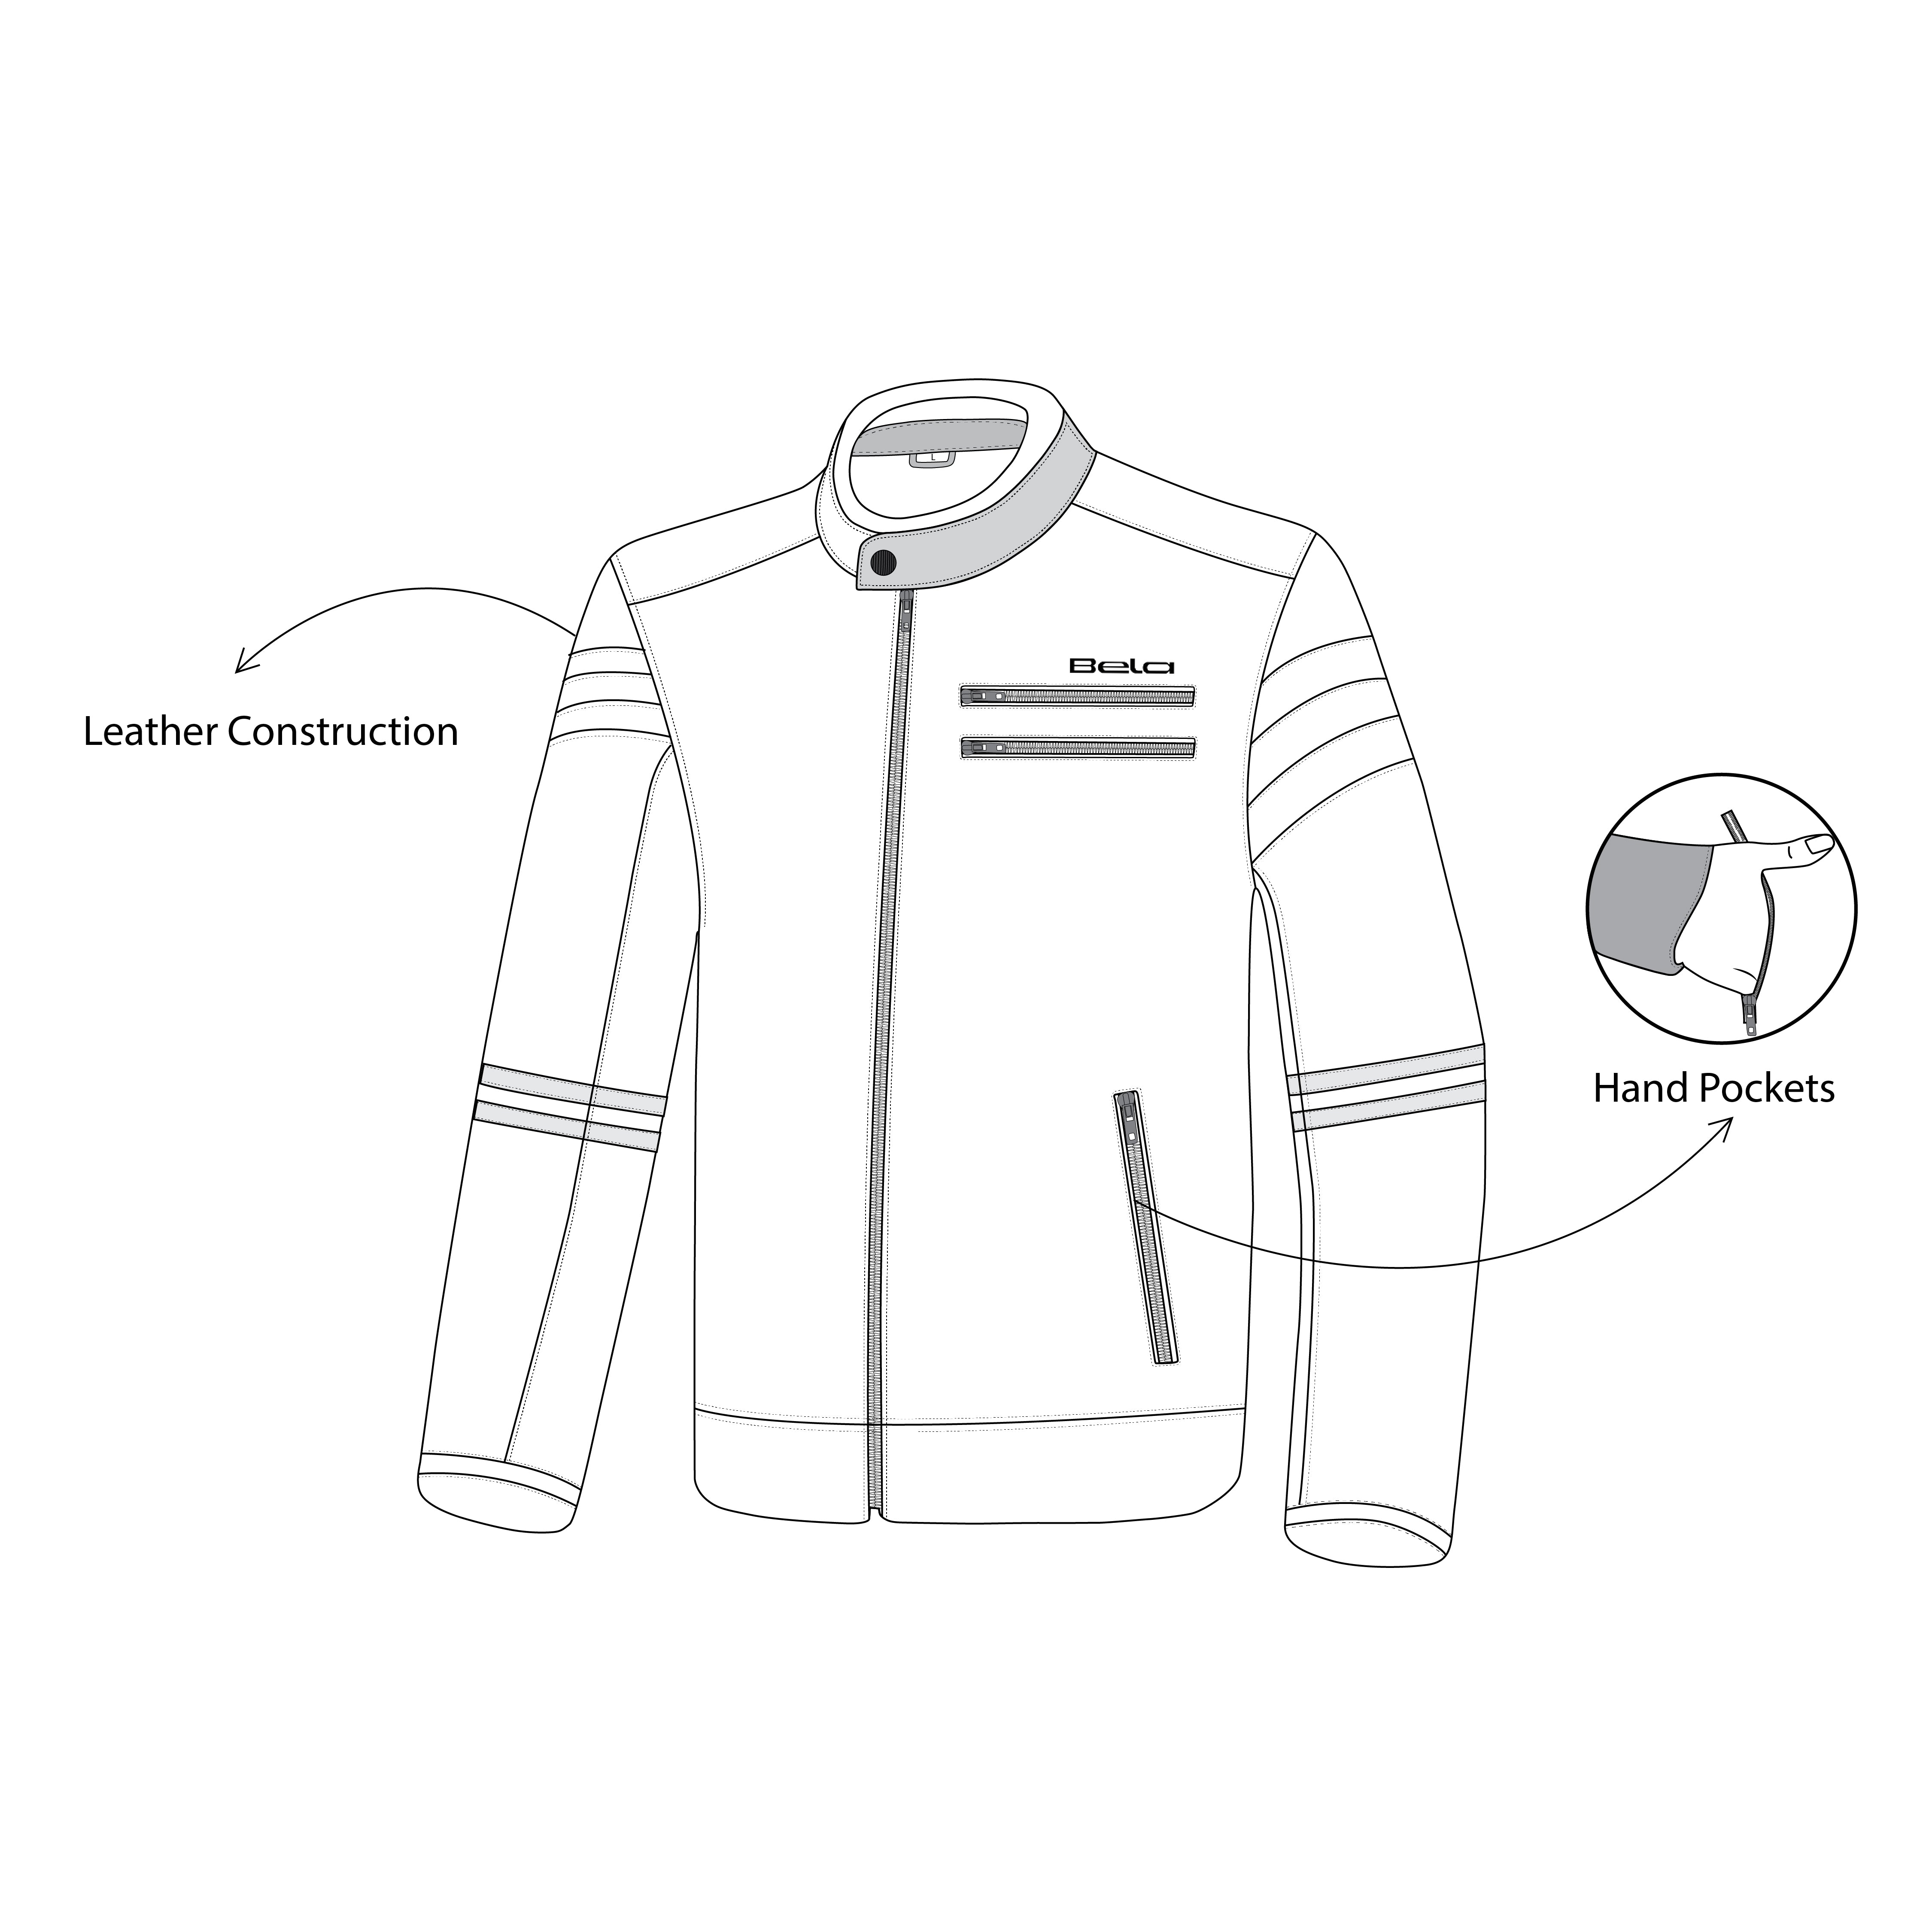 infographic sketch bela royal rider jacket black color riding jacket front side view